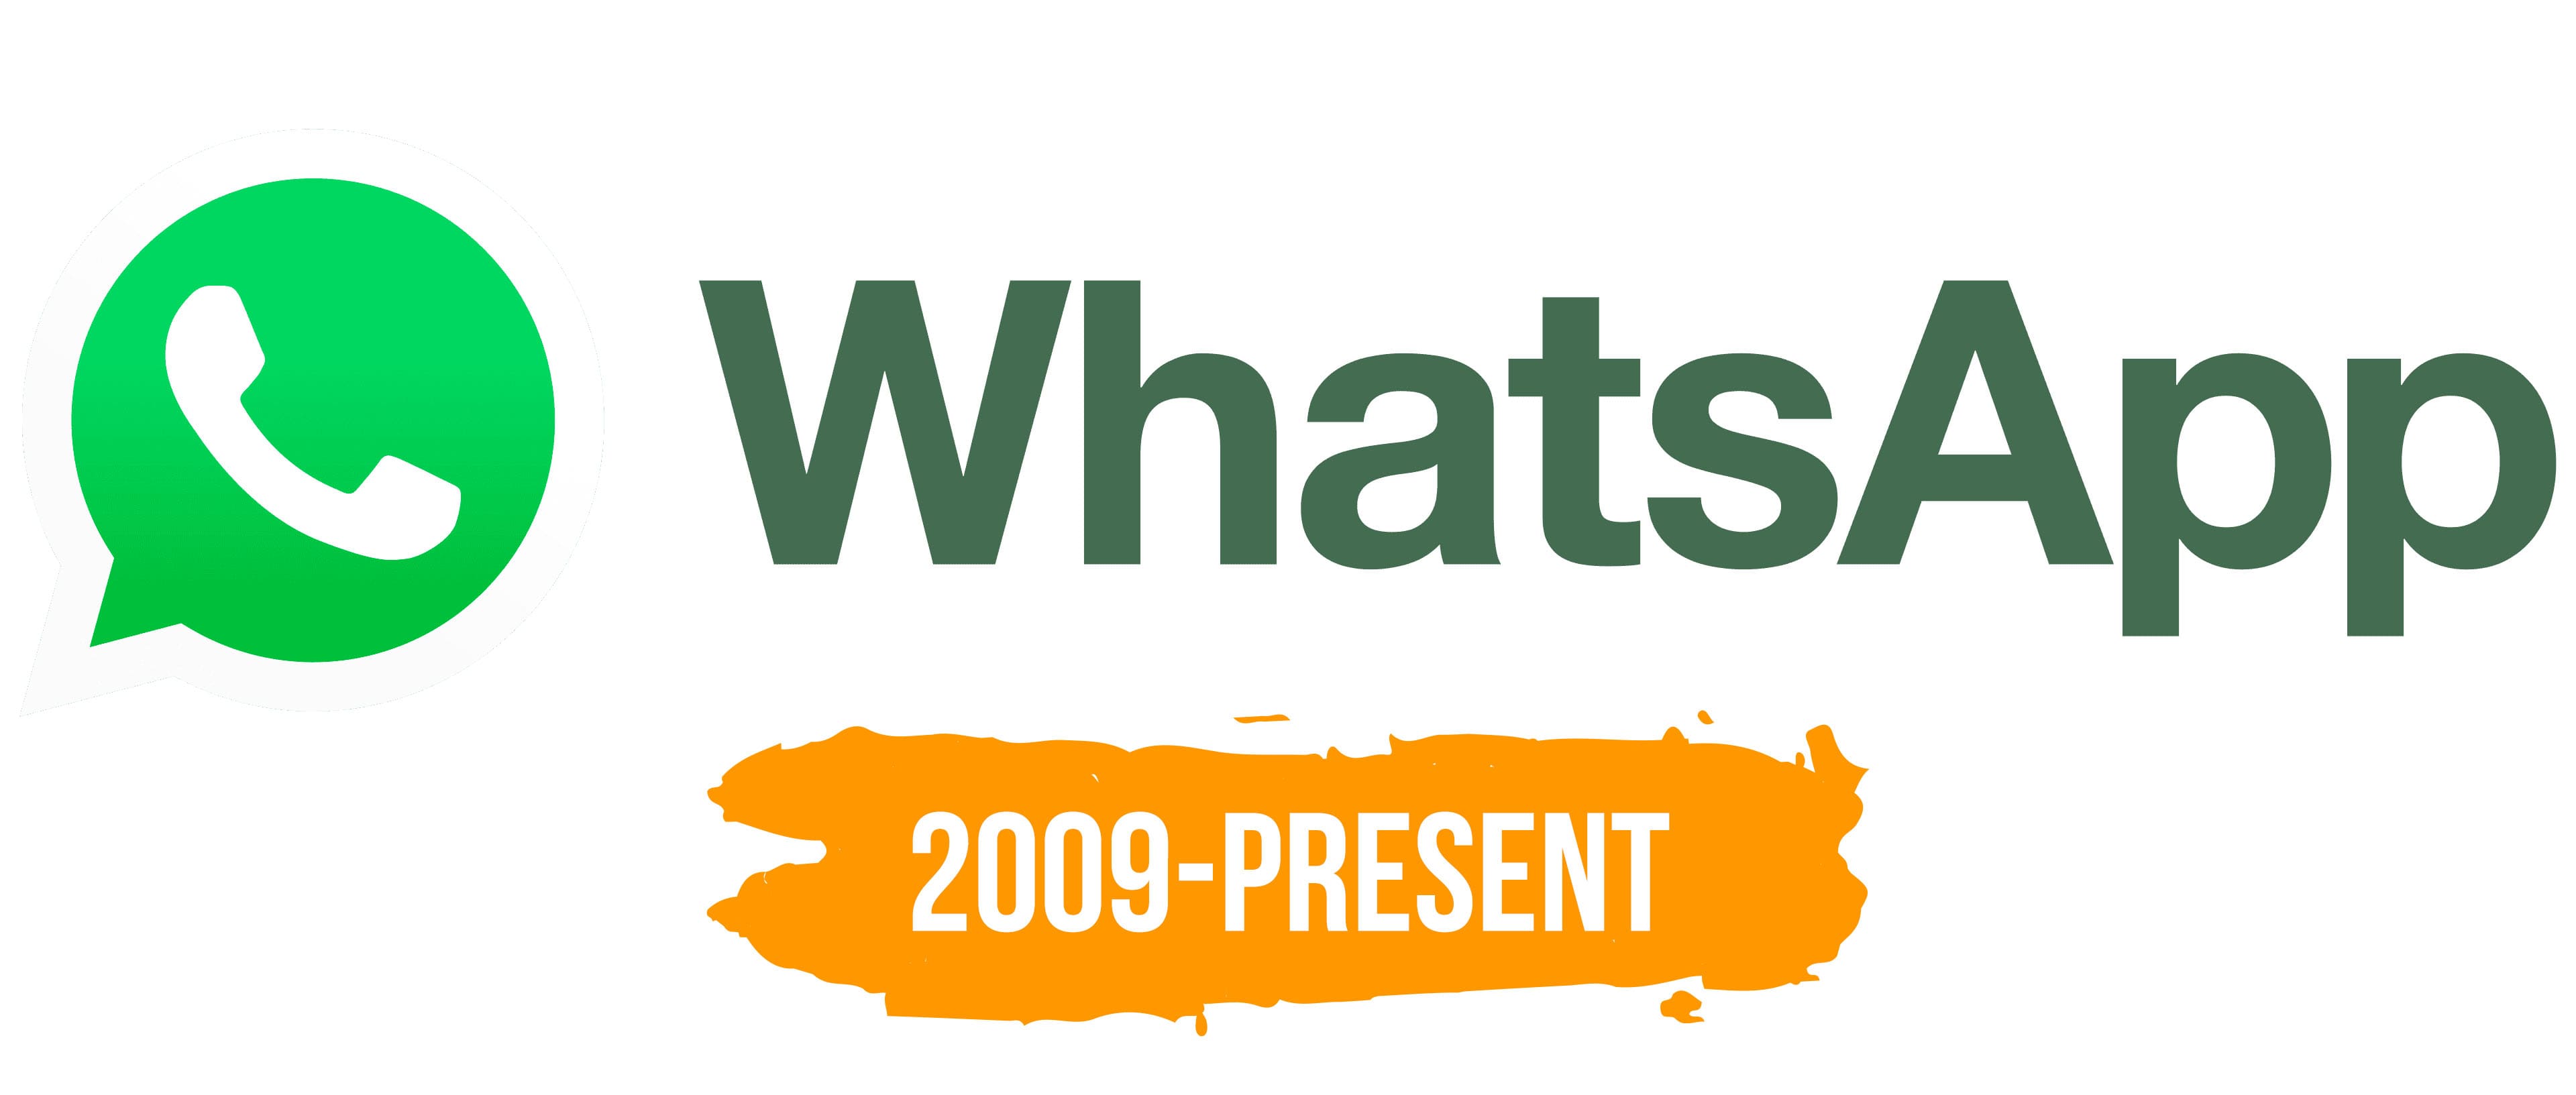 Whatsapp Logo Histoire Et Signification Evolution Symbole Whatsapp 25080 Hot Sex Picture